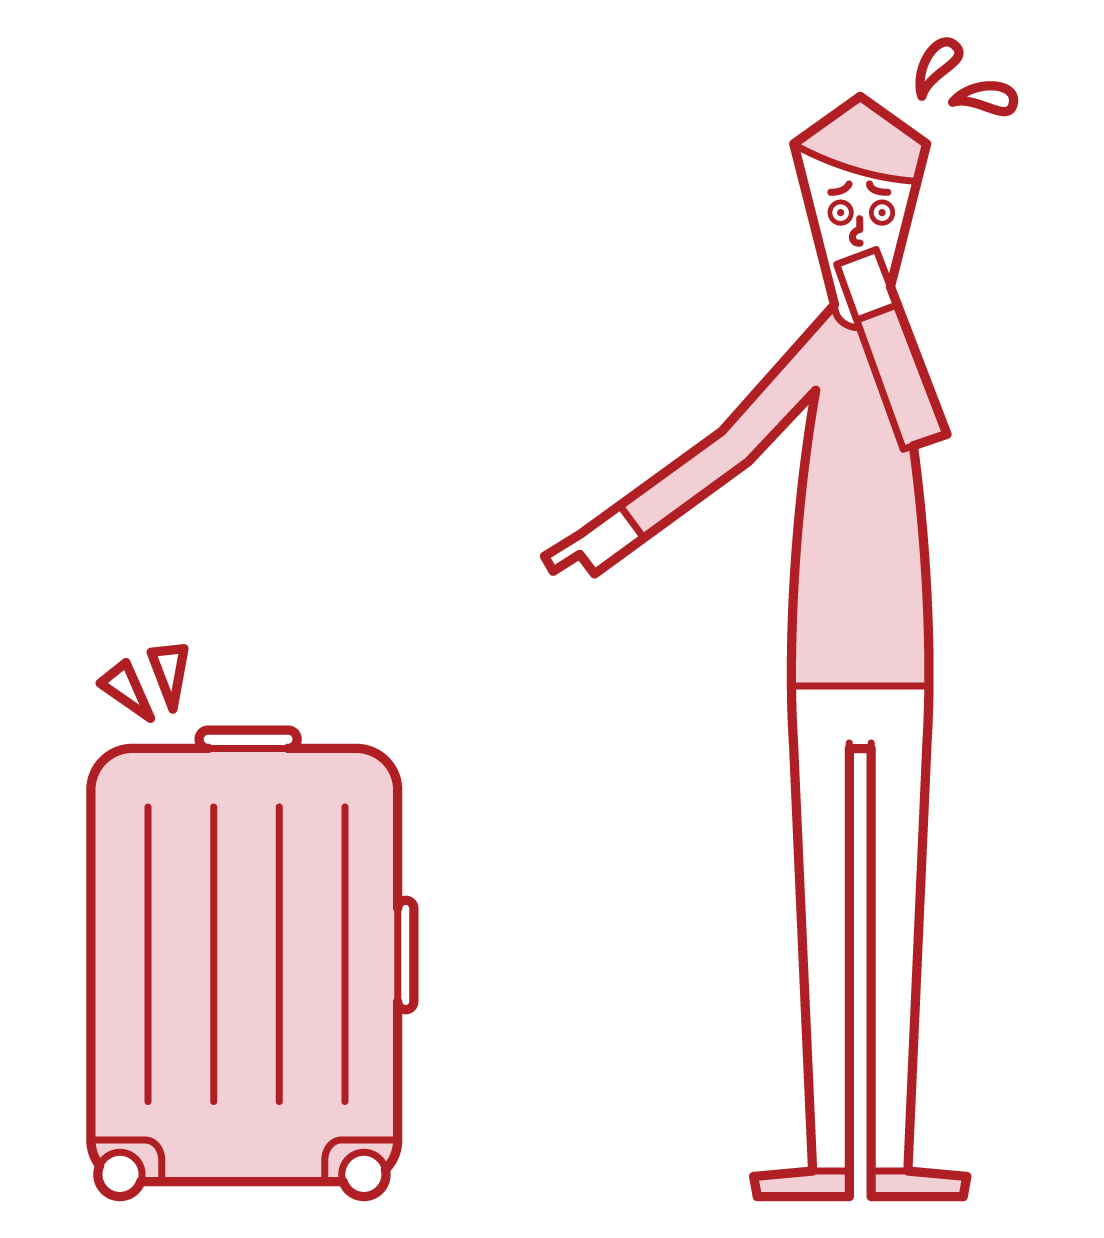 Illustration of a man who found suspicious luggage